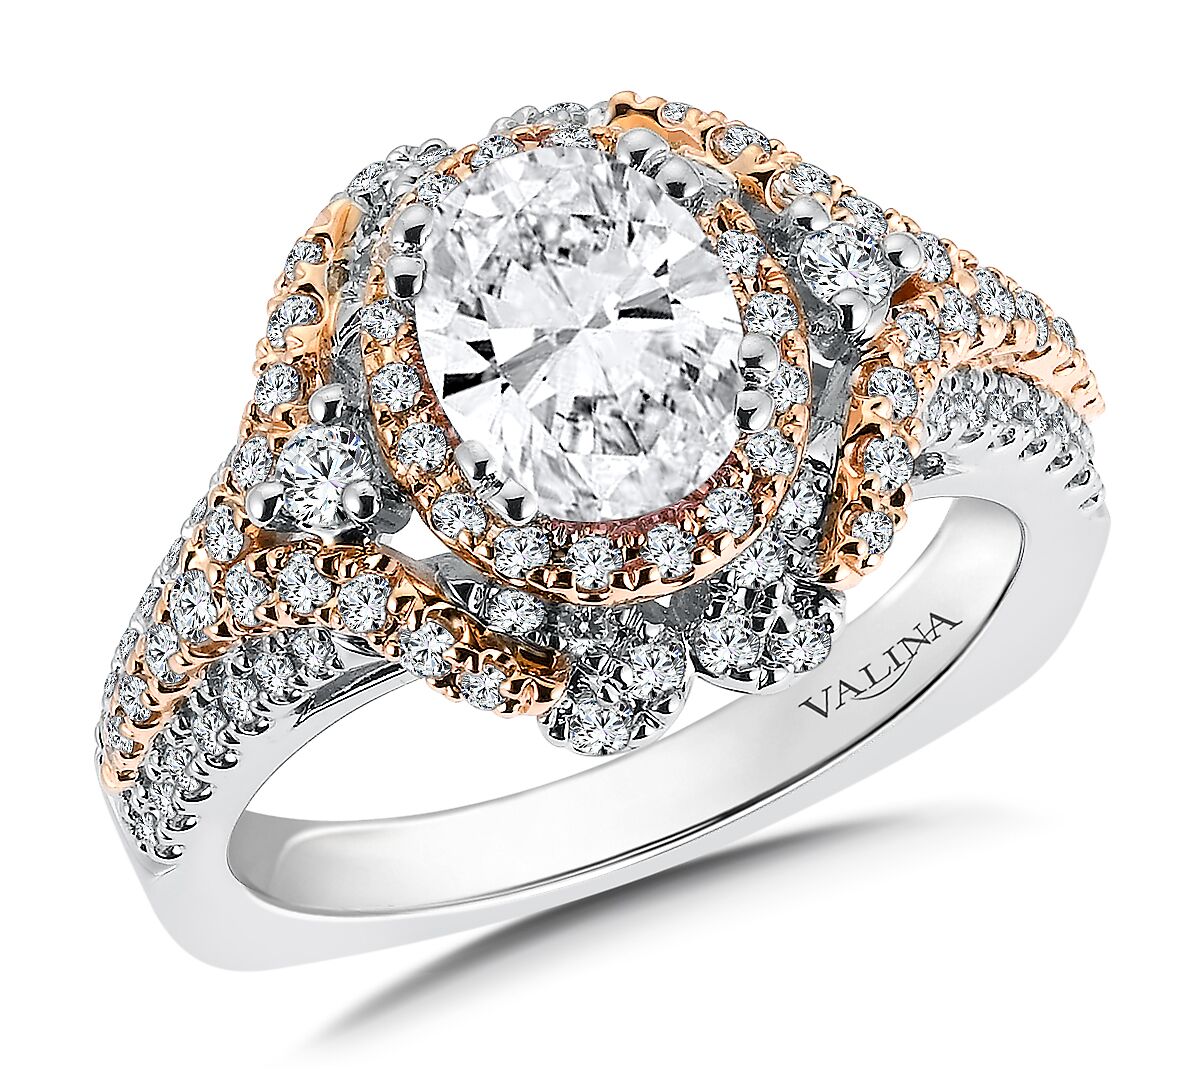 custom engagement rings in dallas texas - best diamond rings in dallas - best diamond prices - oval diamonds - 2 carat diamonds - dallas texas